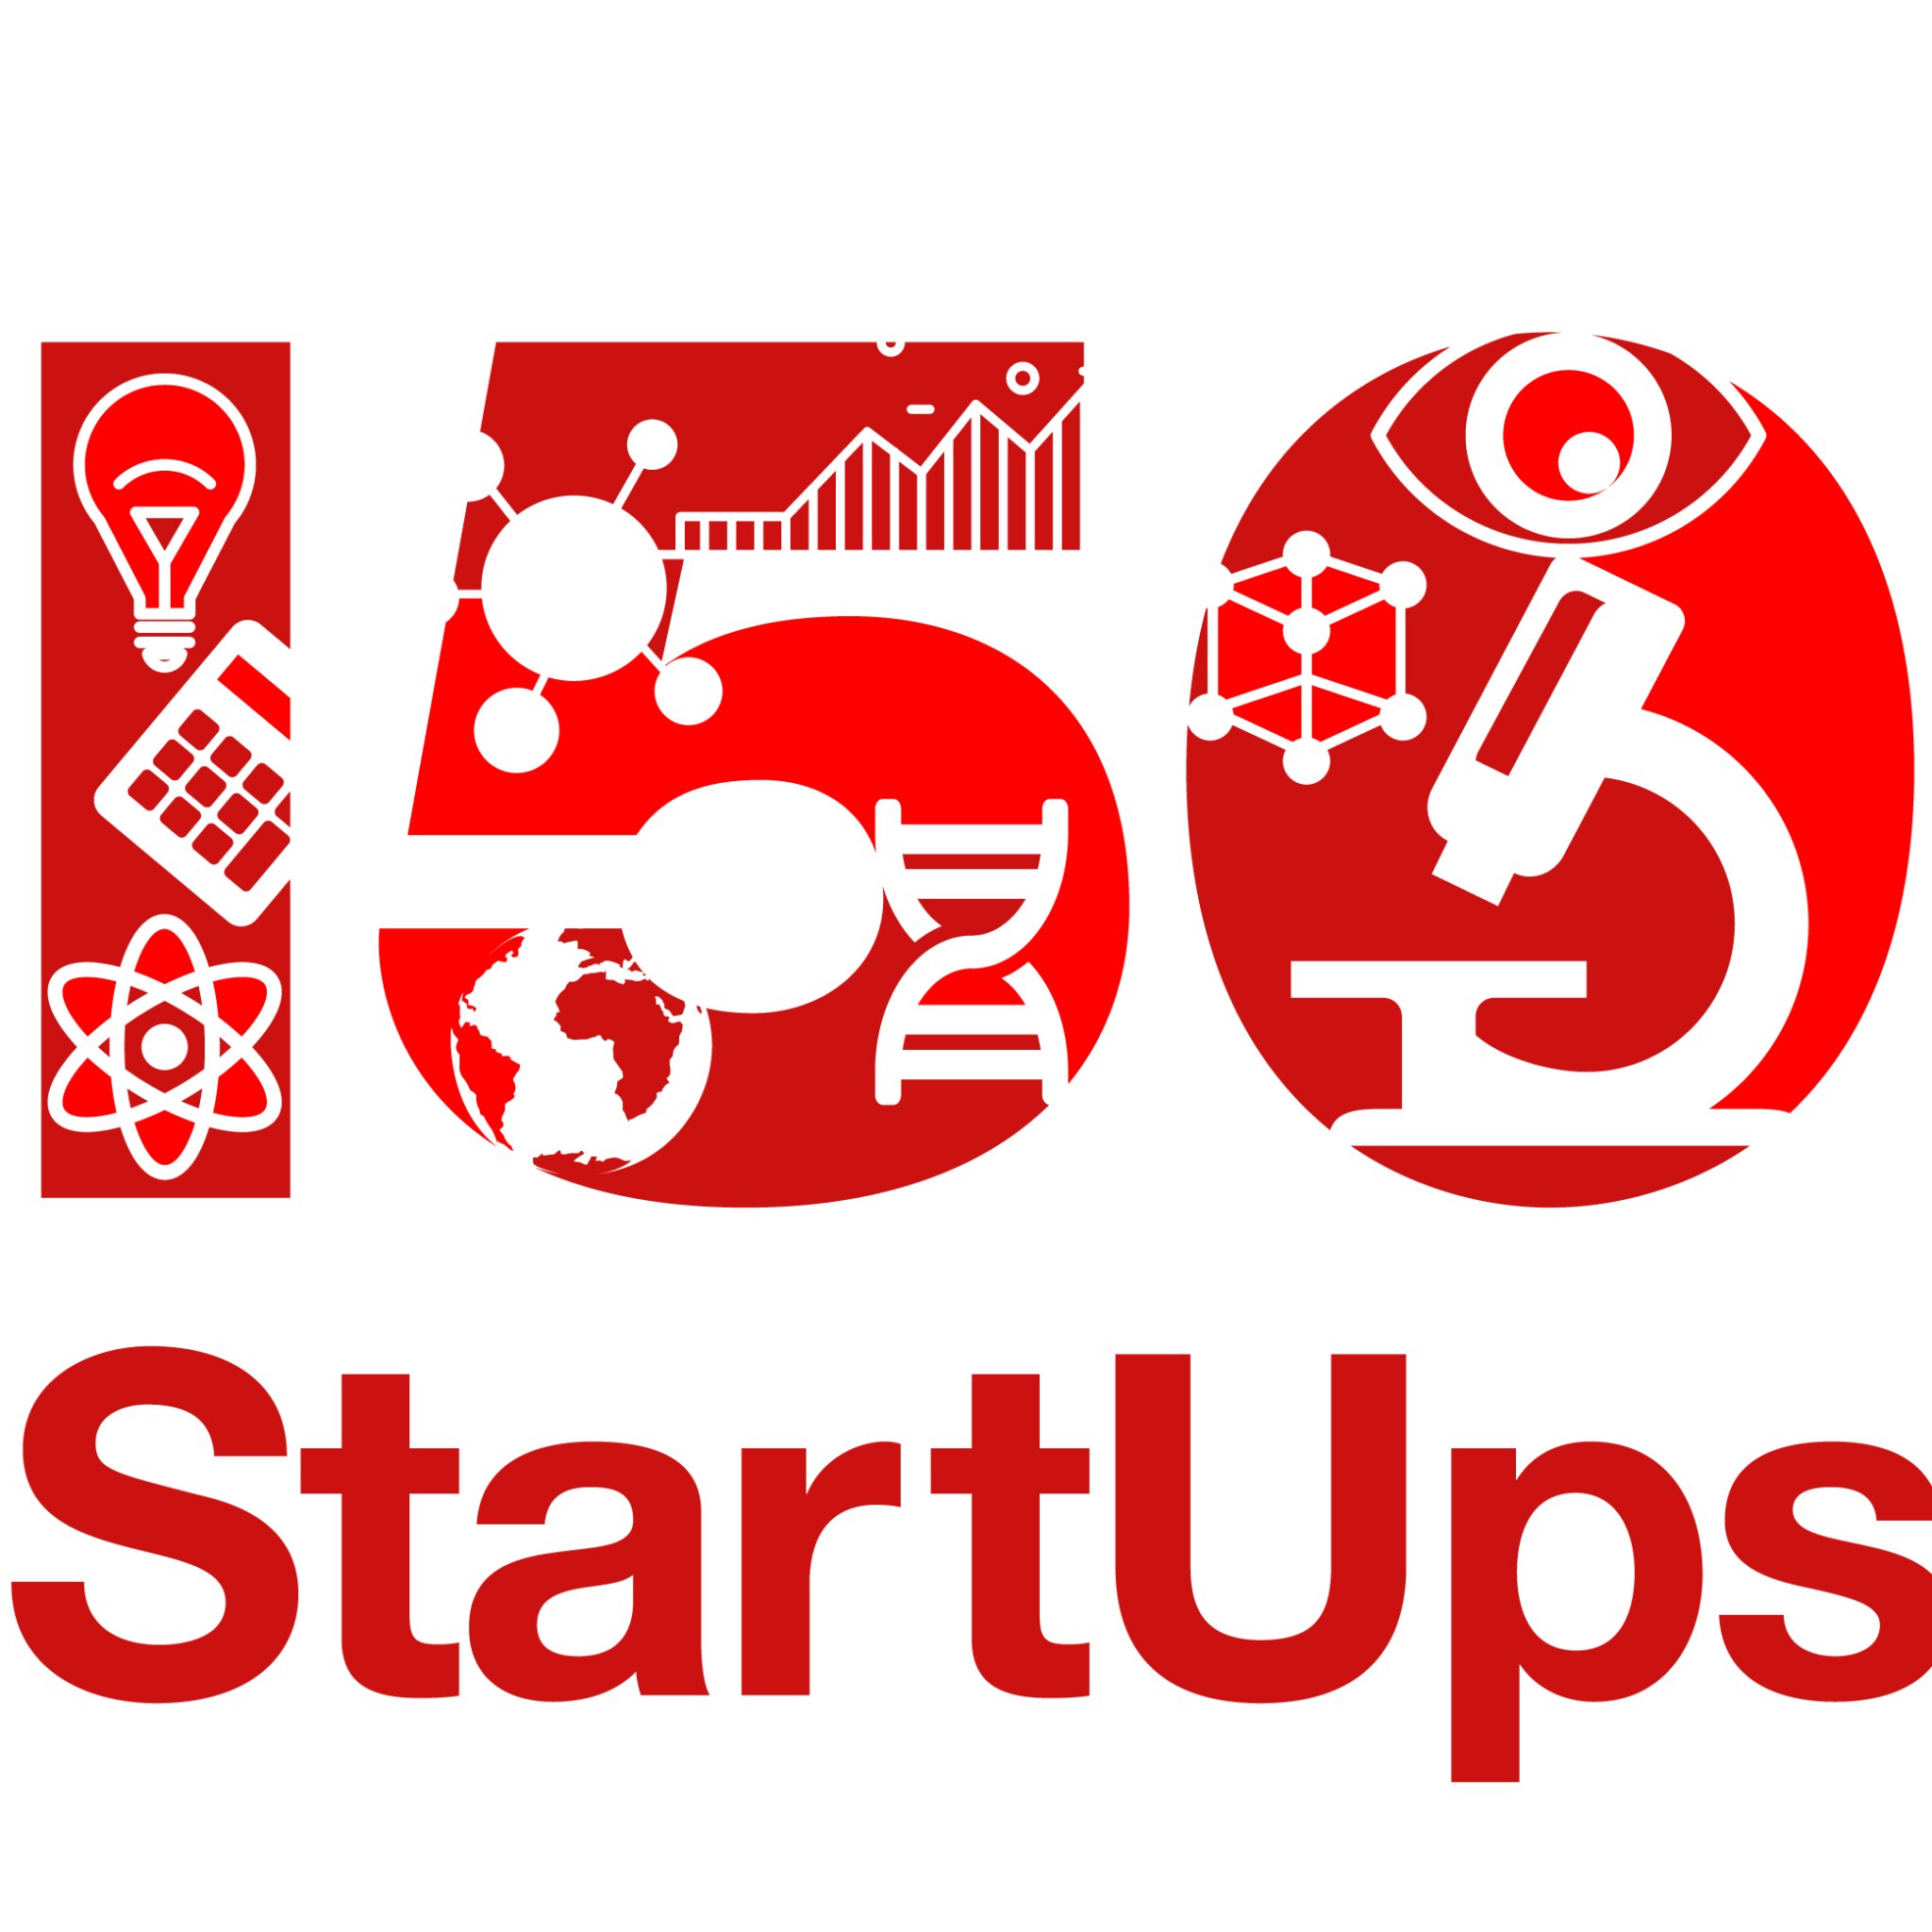 150 Startups